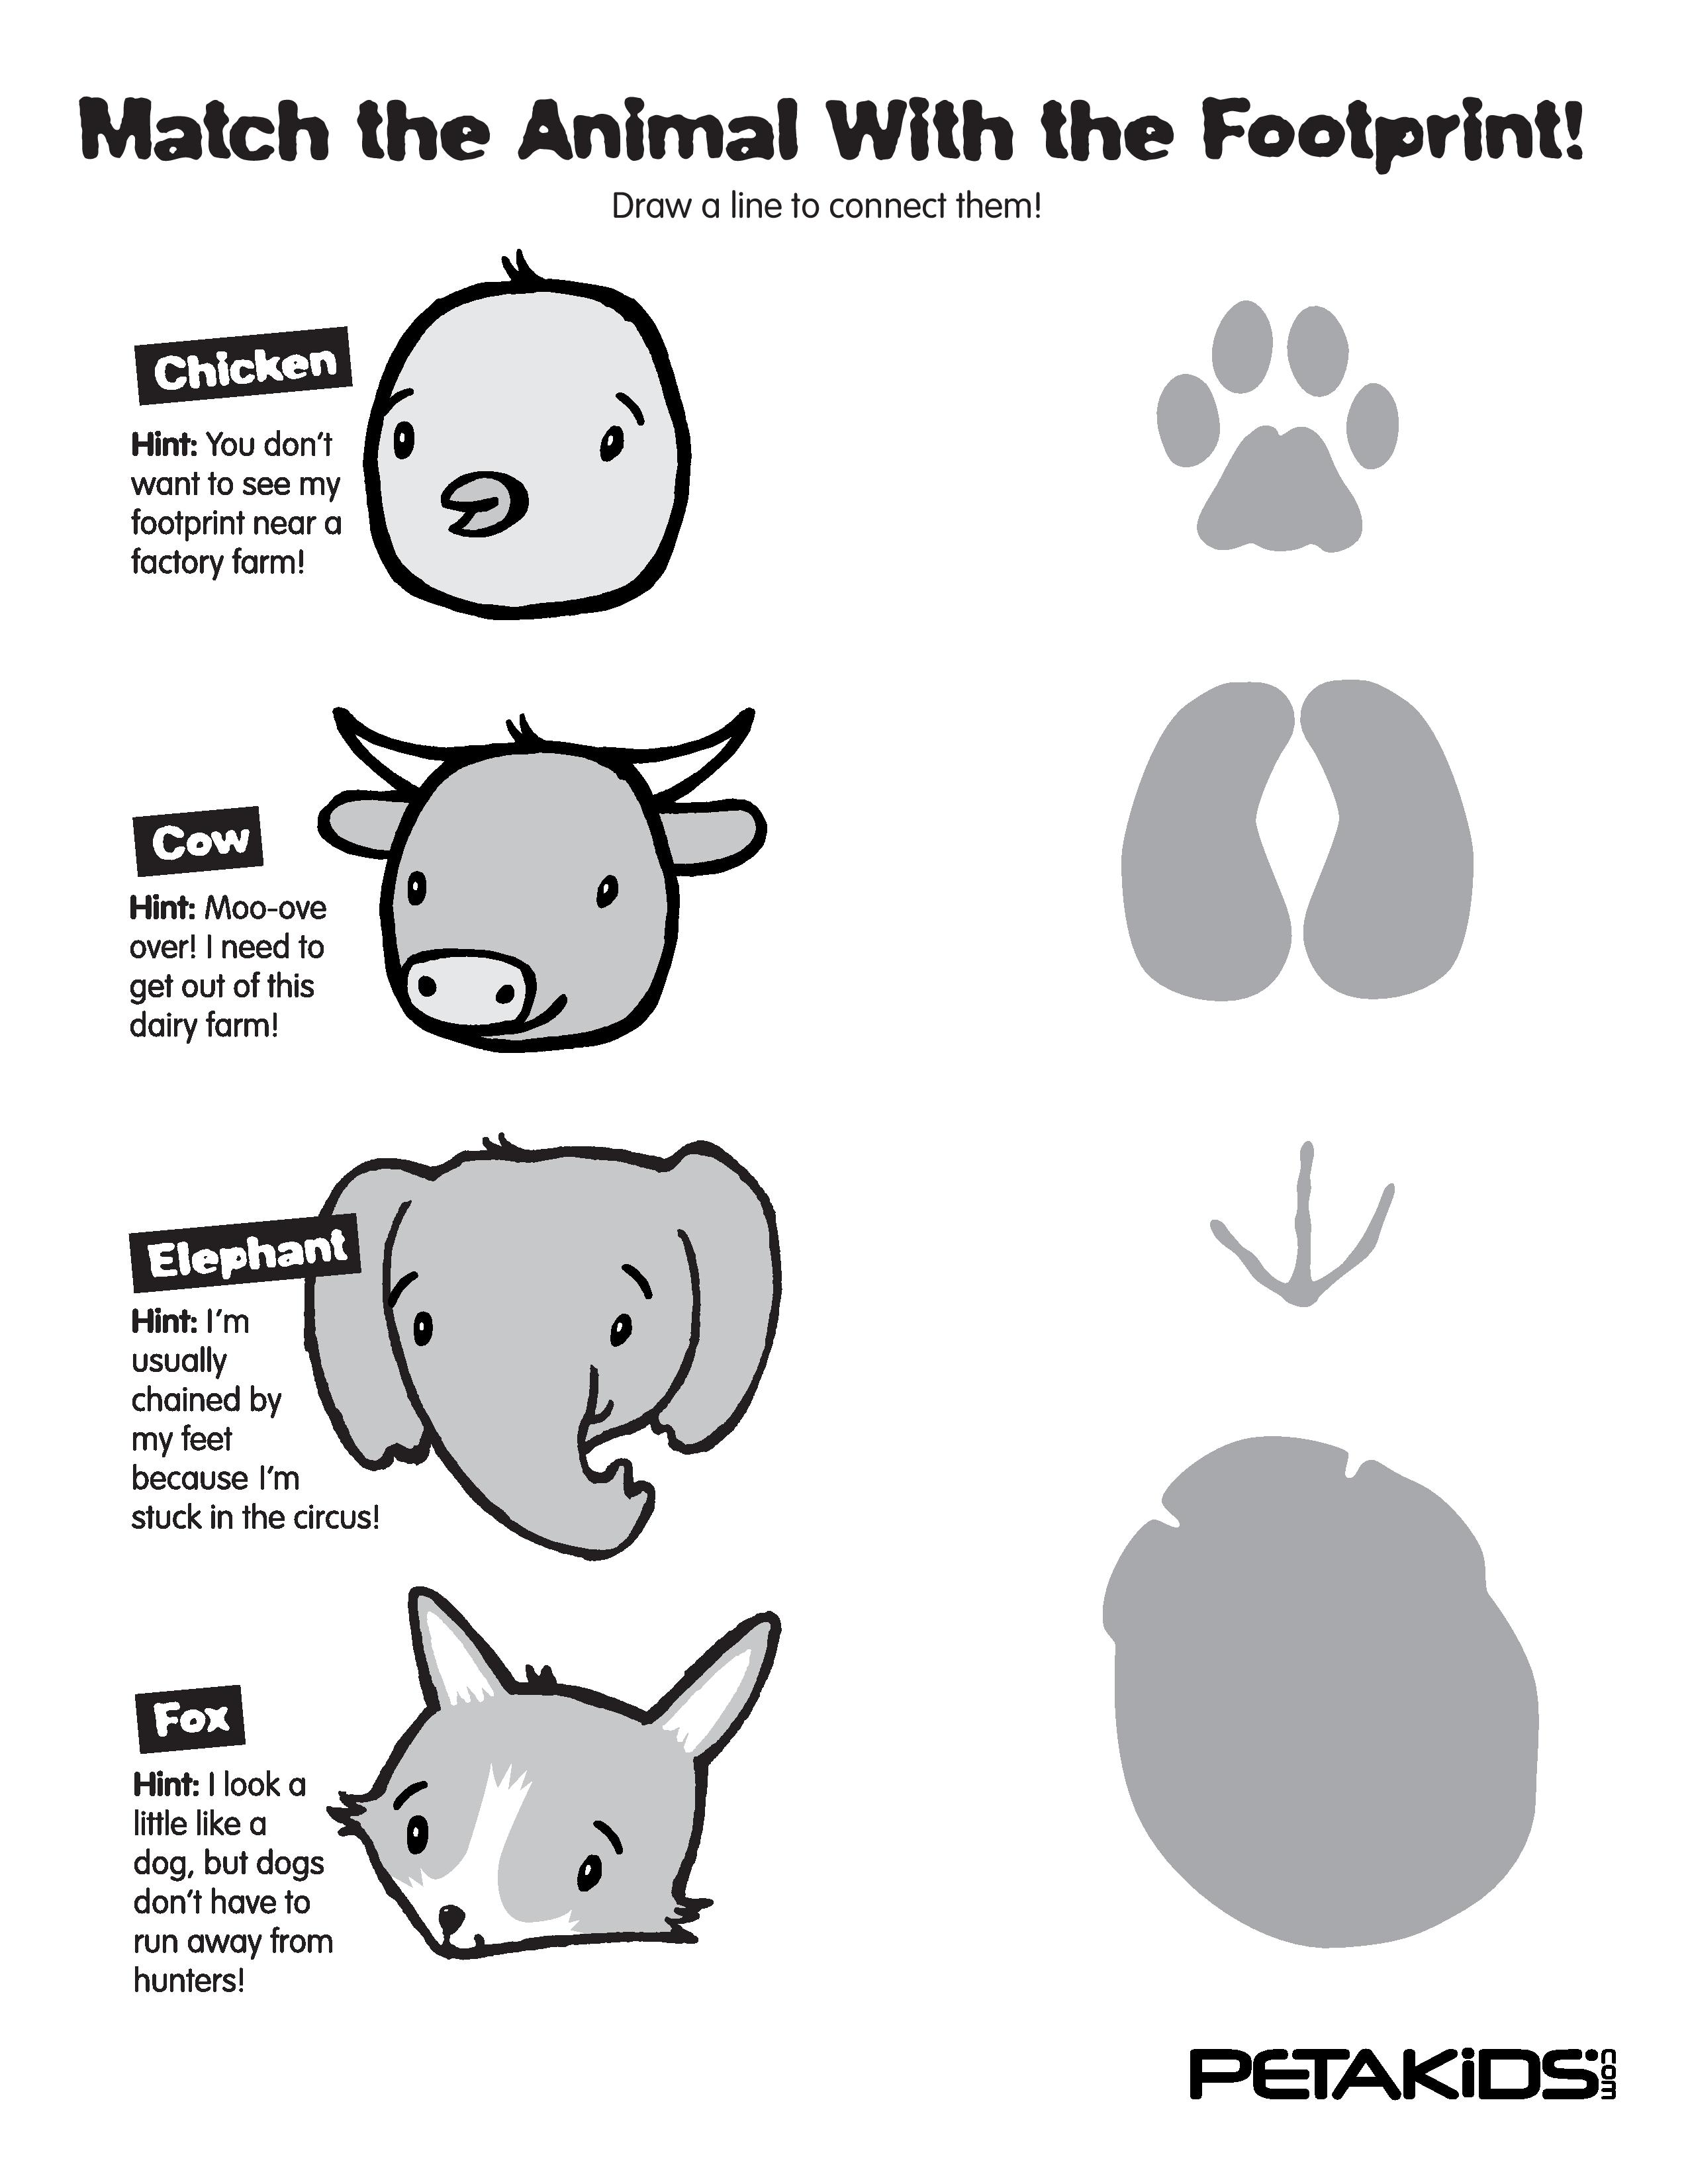 free-animal-footprints-download-free-animal-footprints-png-images